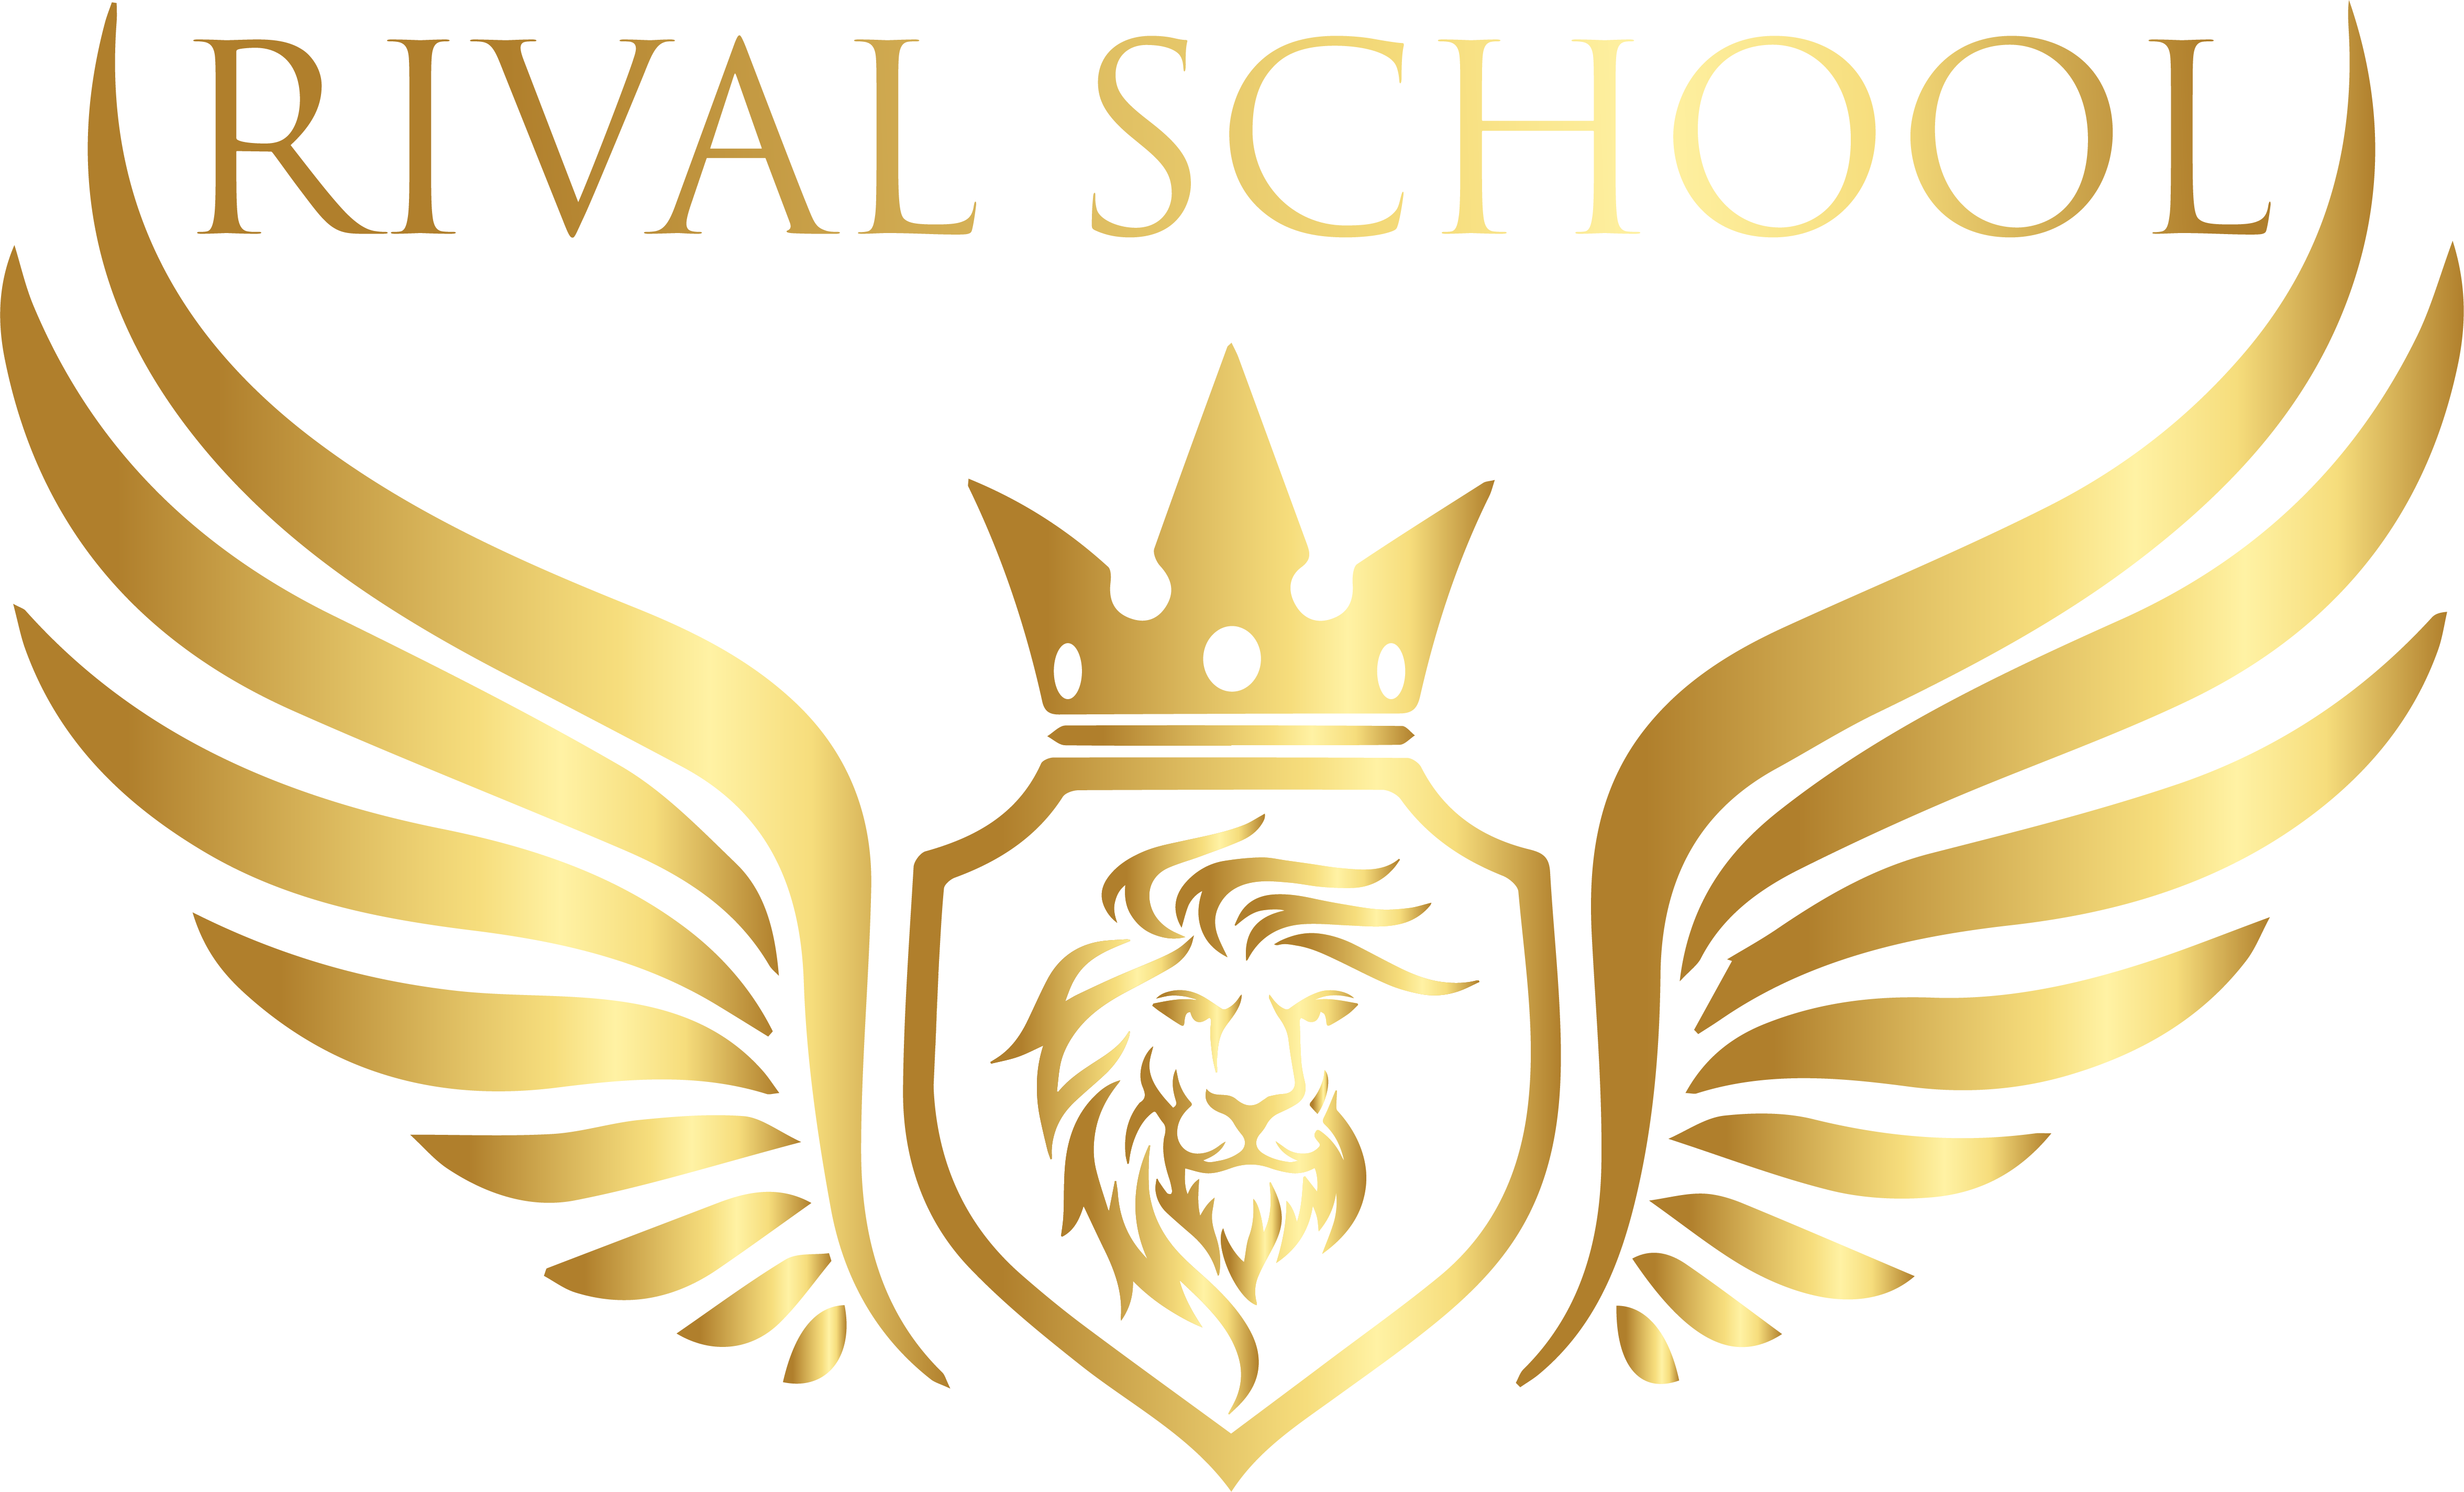 Rival School